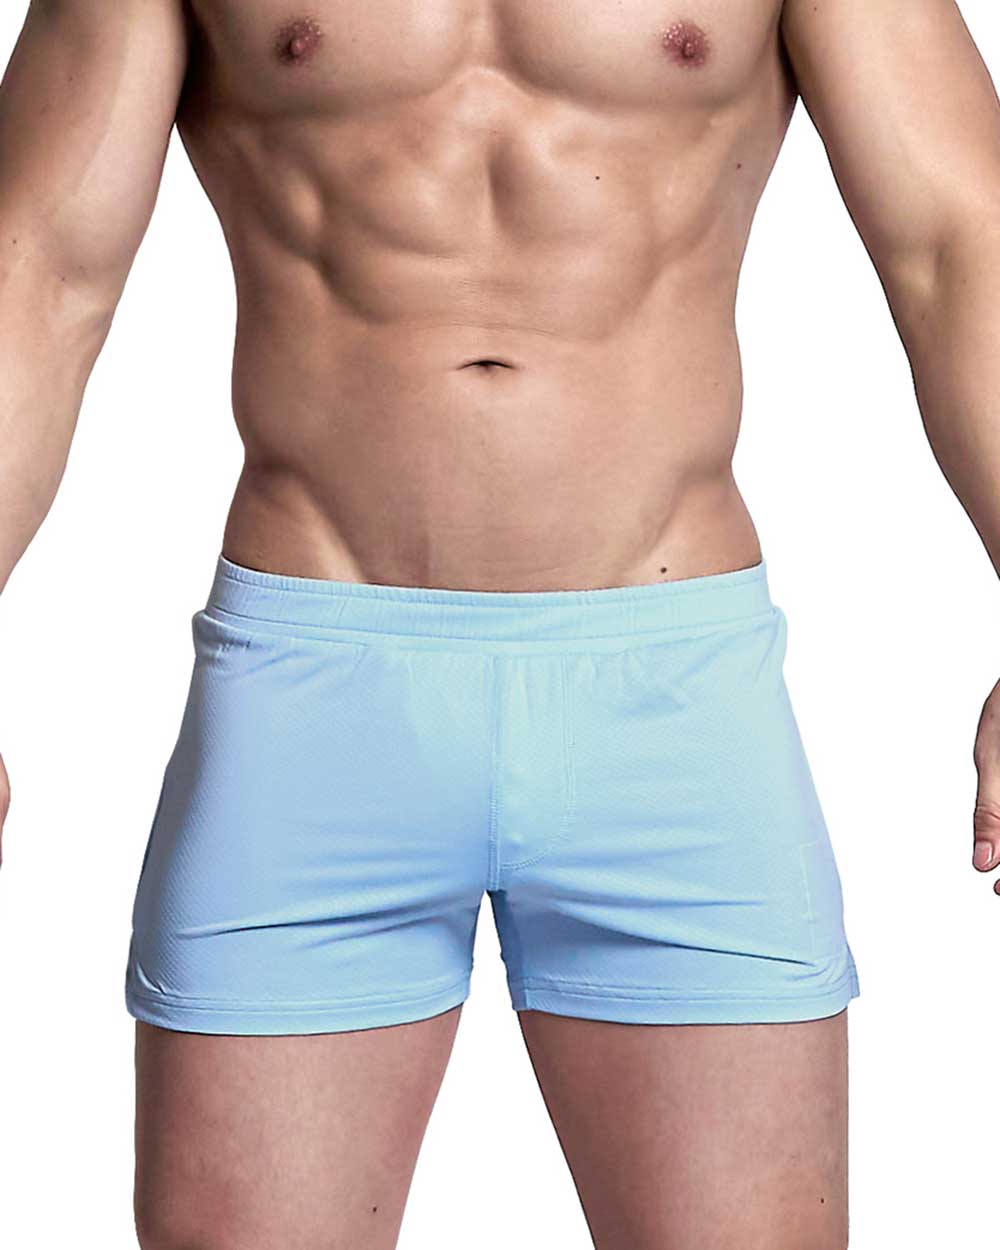 Evo.Boxer Lounge Shorts With Inner Bulge - Ice Blue [4331]